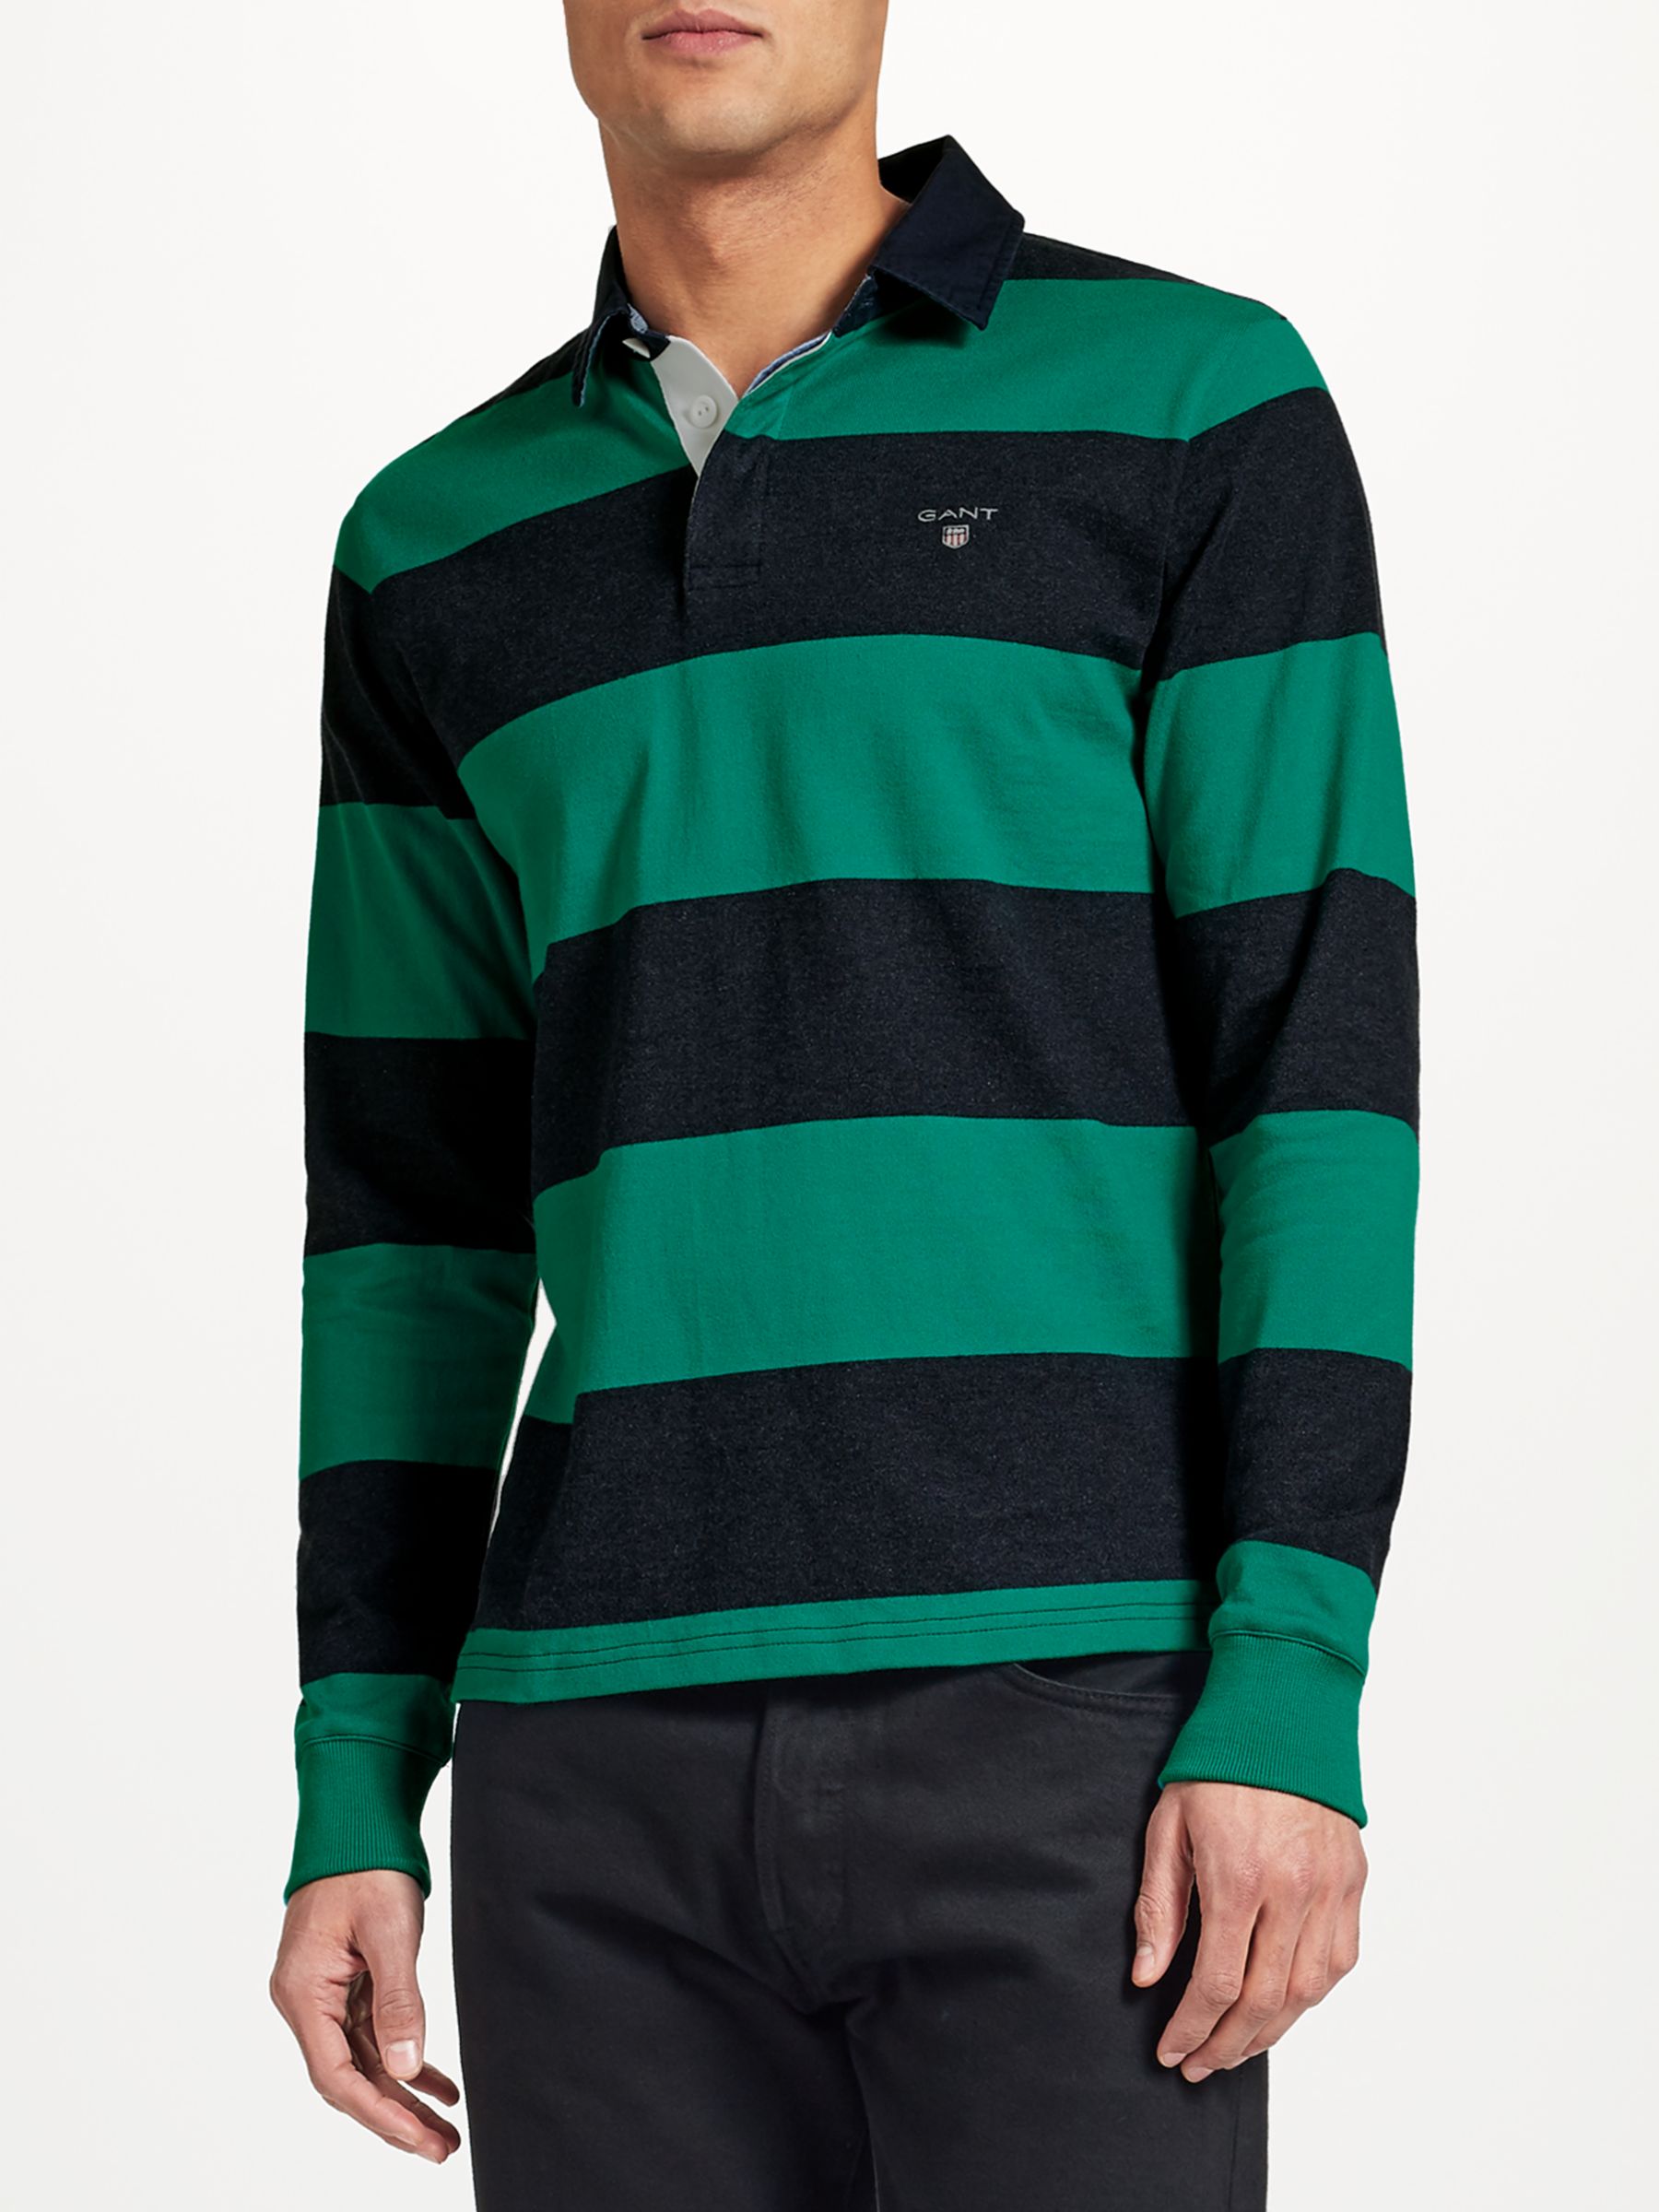 GANT Rugger Bar Stripe Heavy Jersey Rugby Shirt, Emerald Green, L